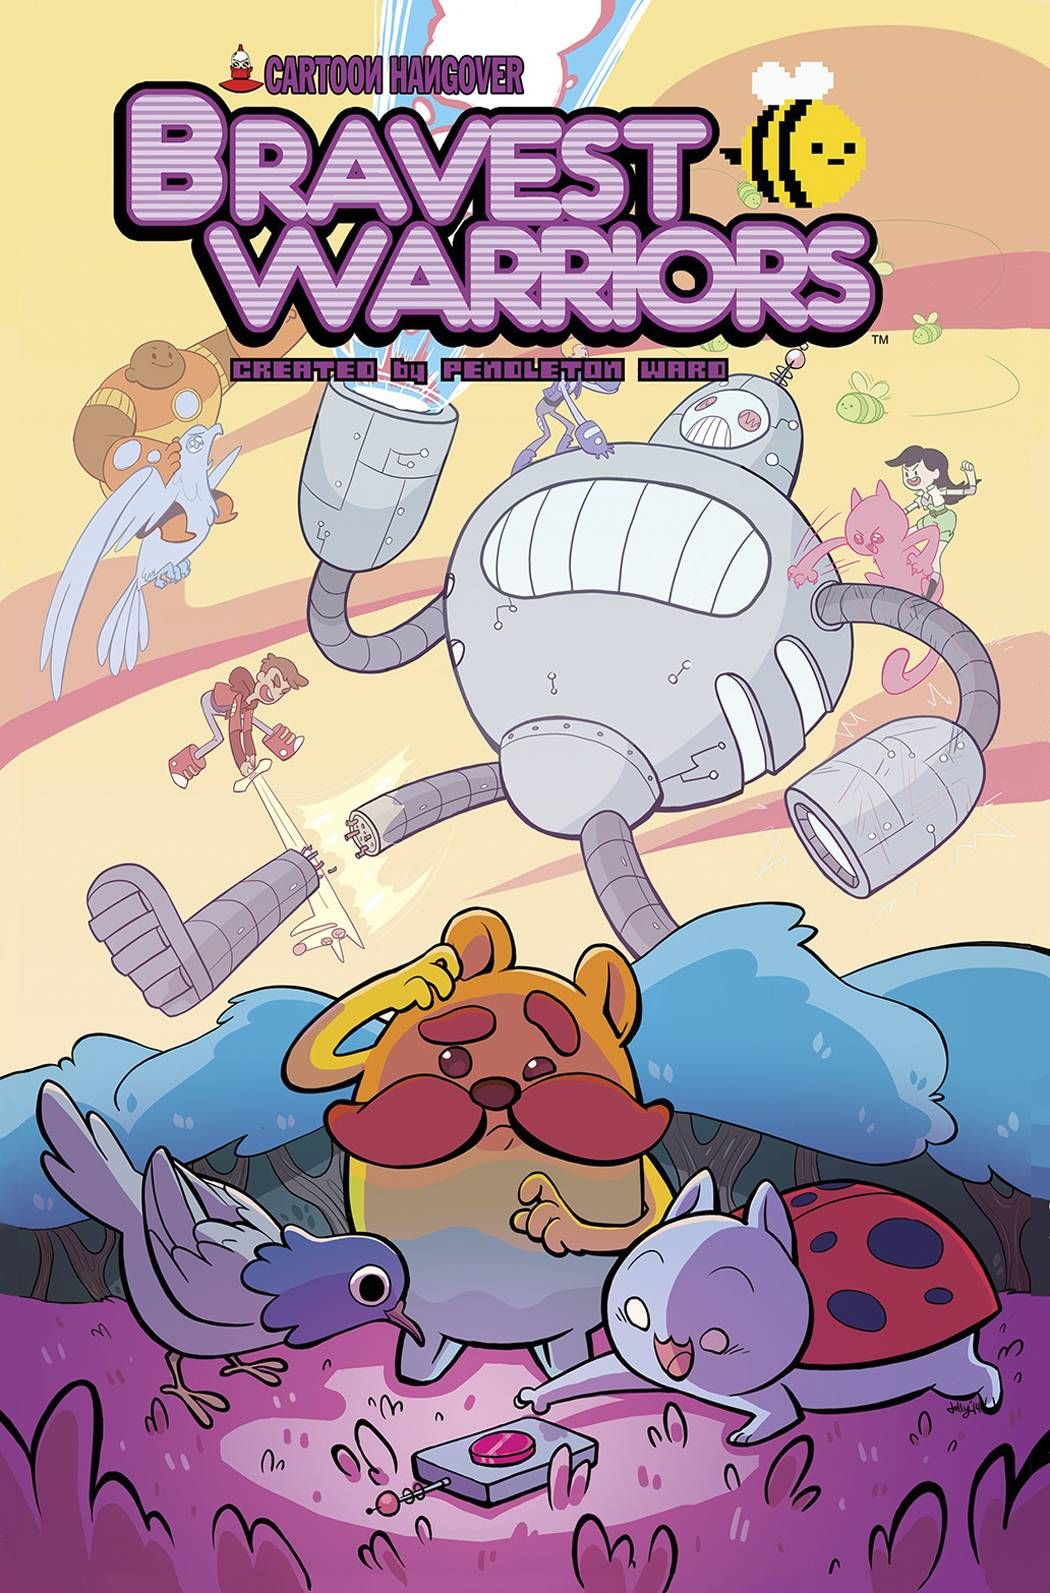 Bravest Warriors #24 Comic